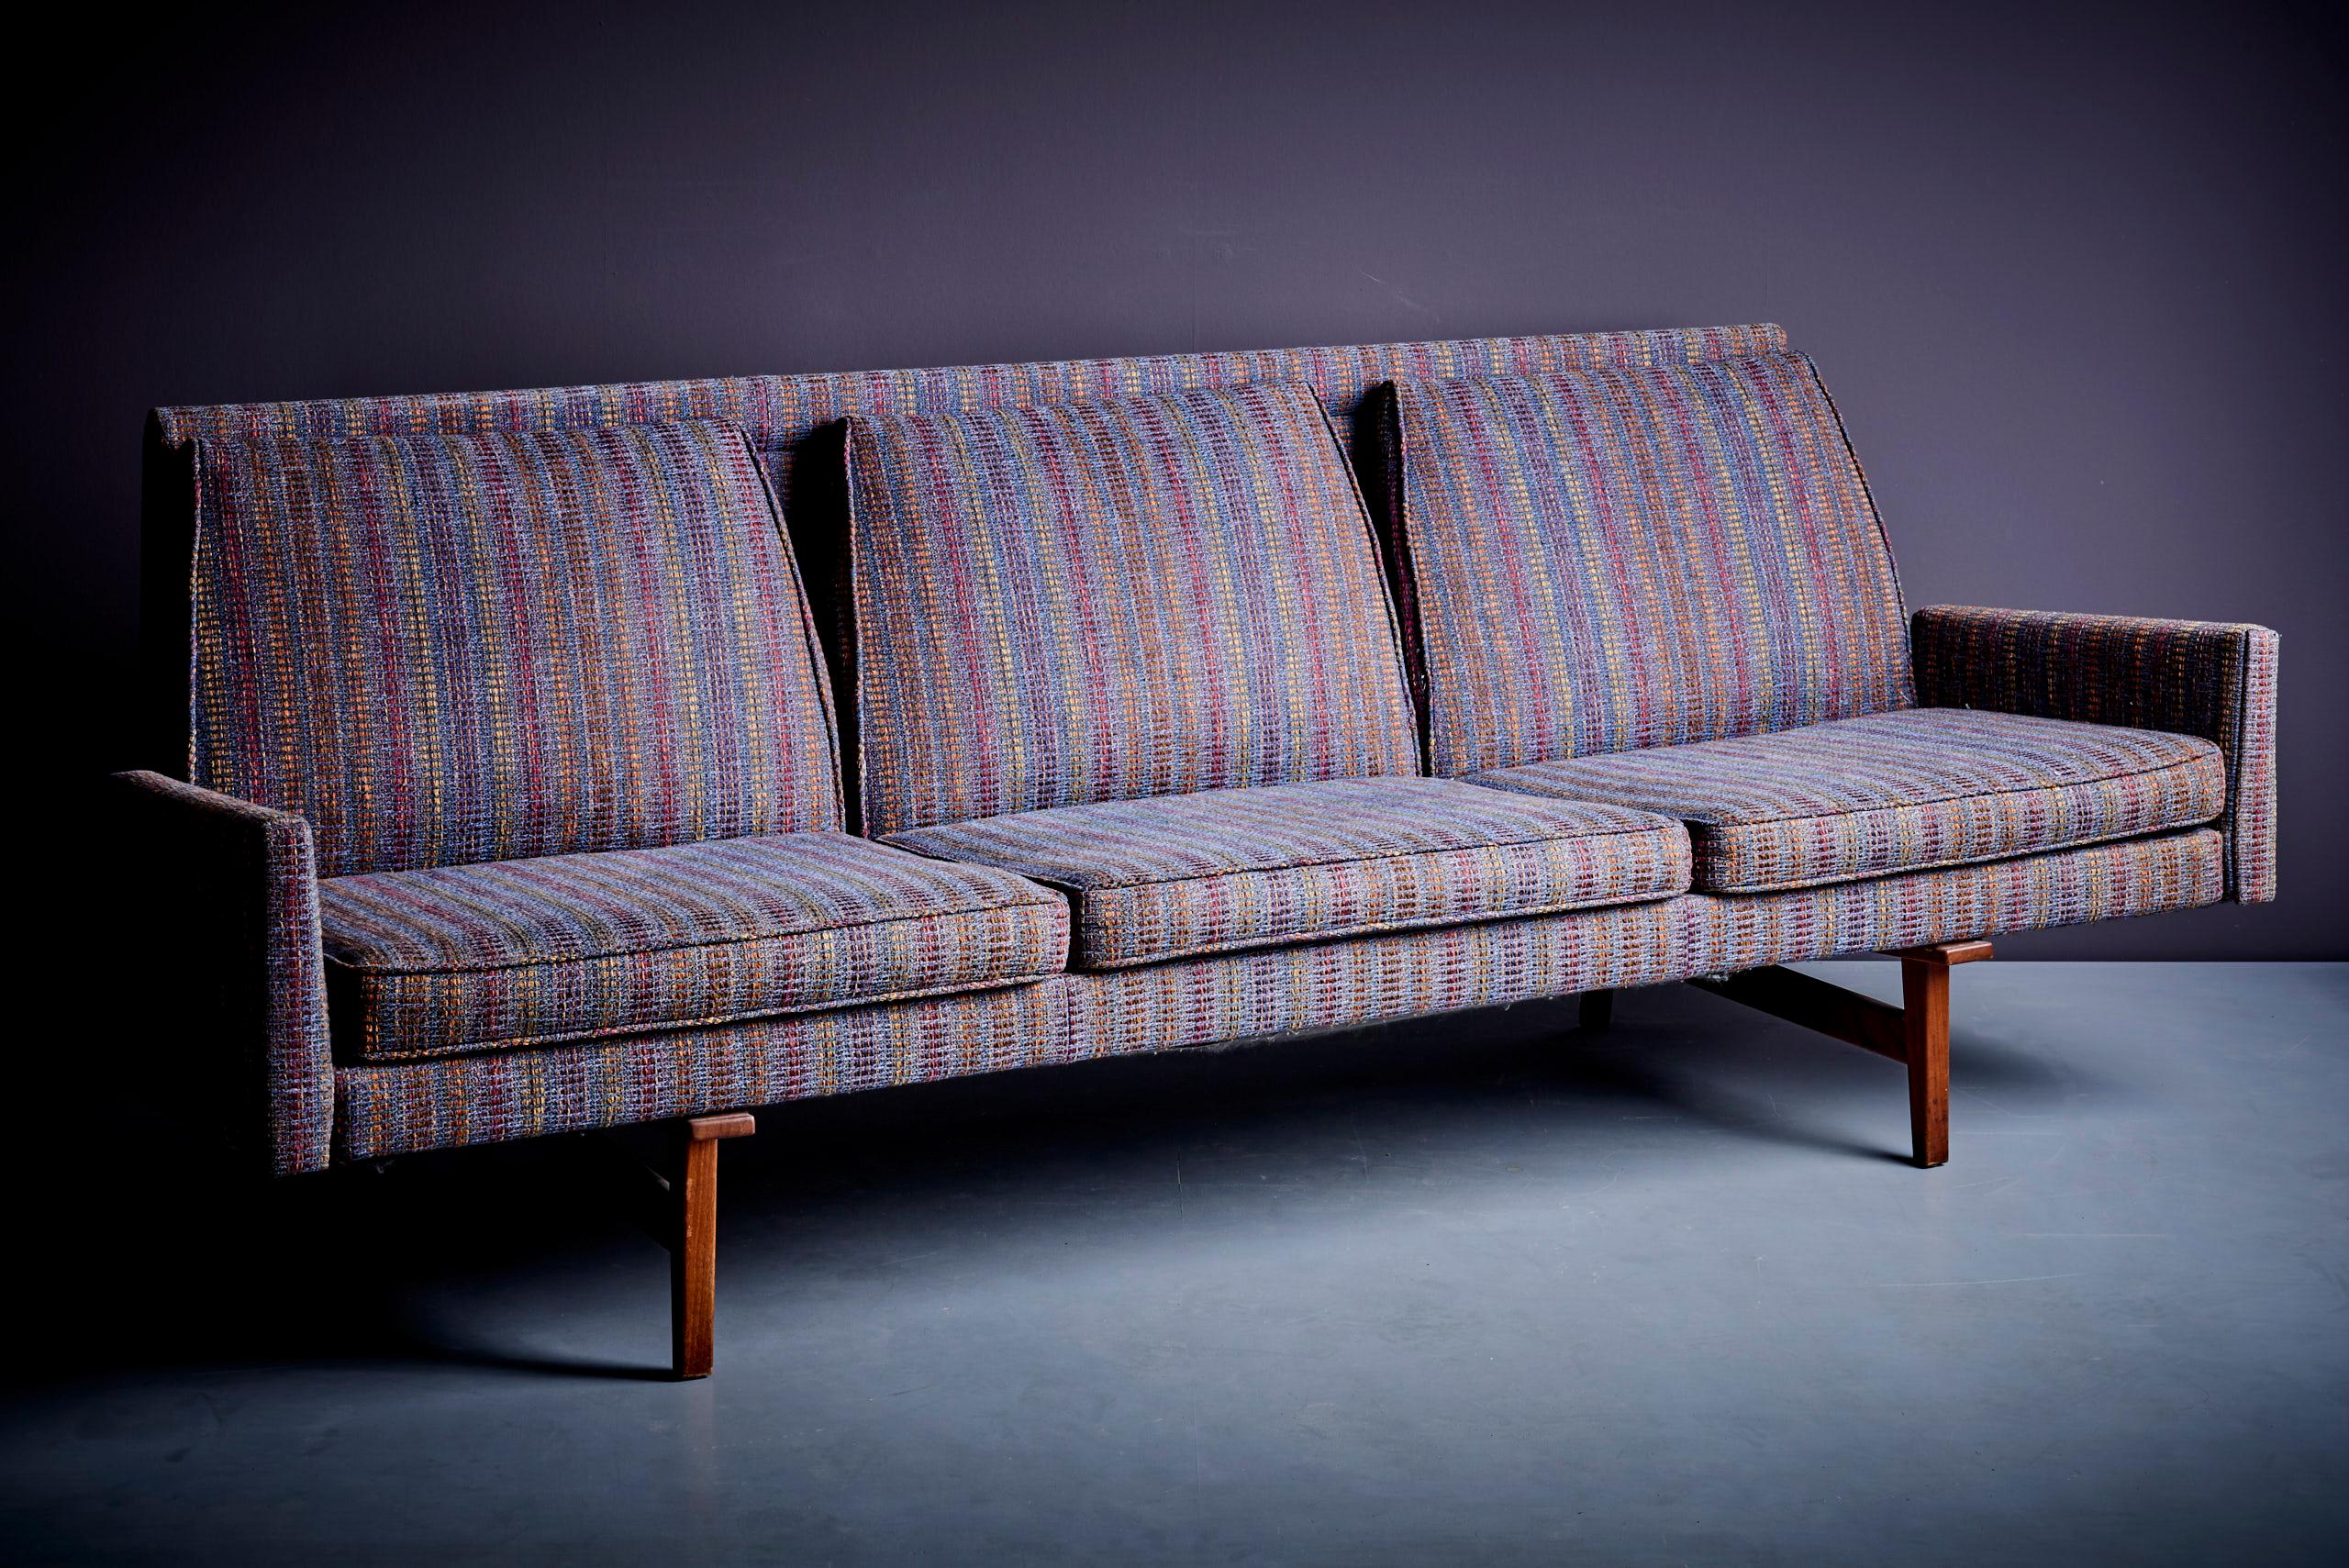 Fabric Three-Seat Jens Risom Sofa for Risom Design Inc multicolored fabric with stripes For Sale